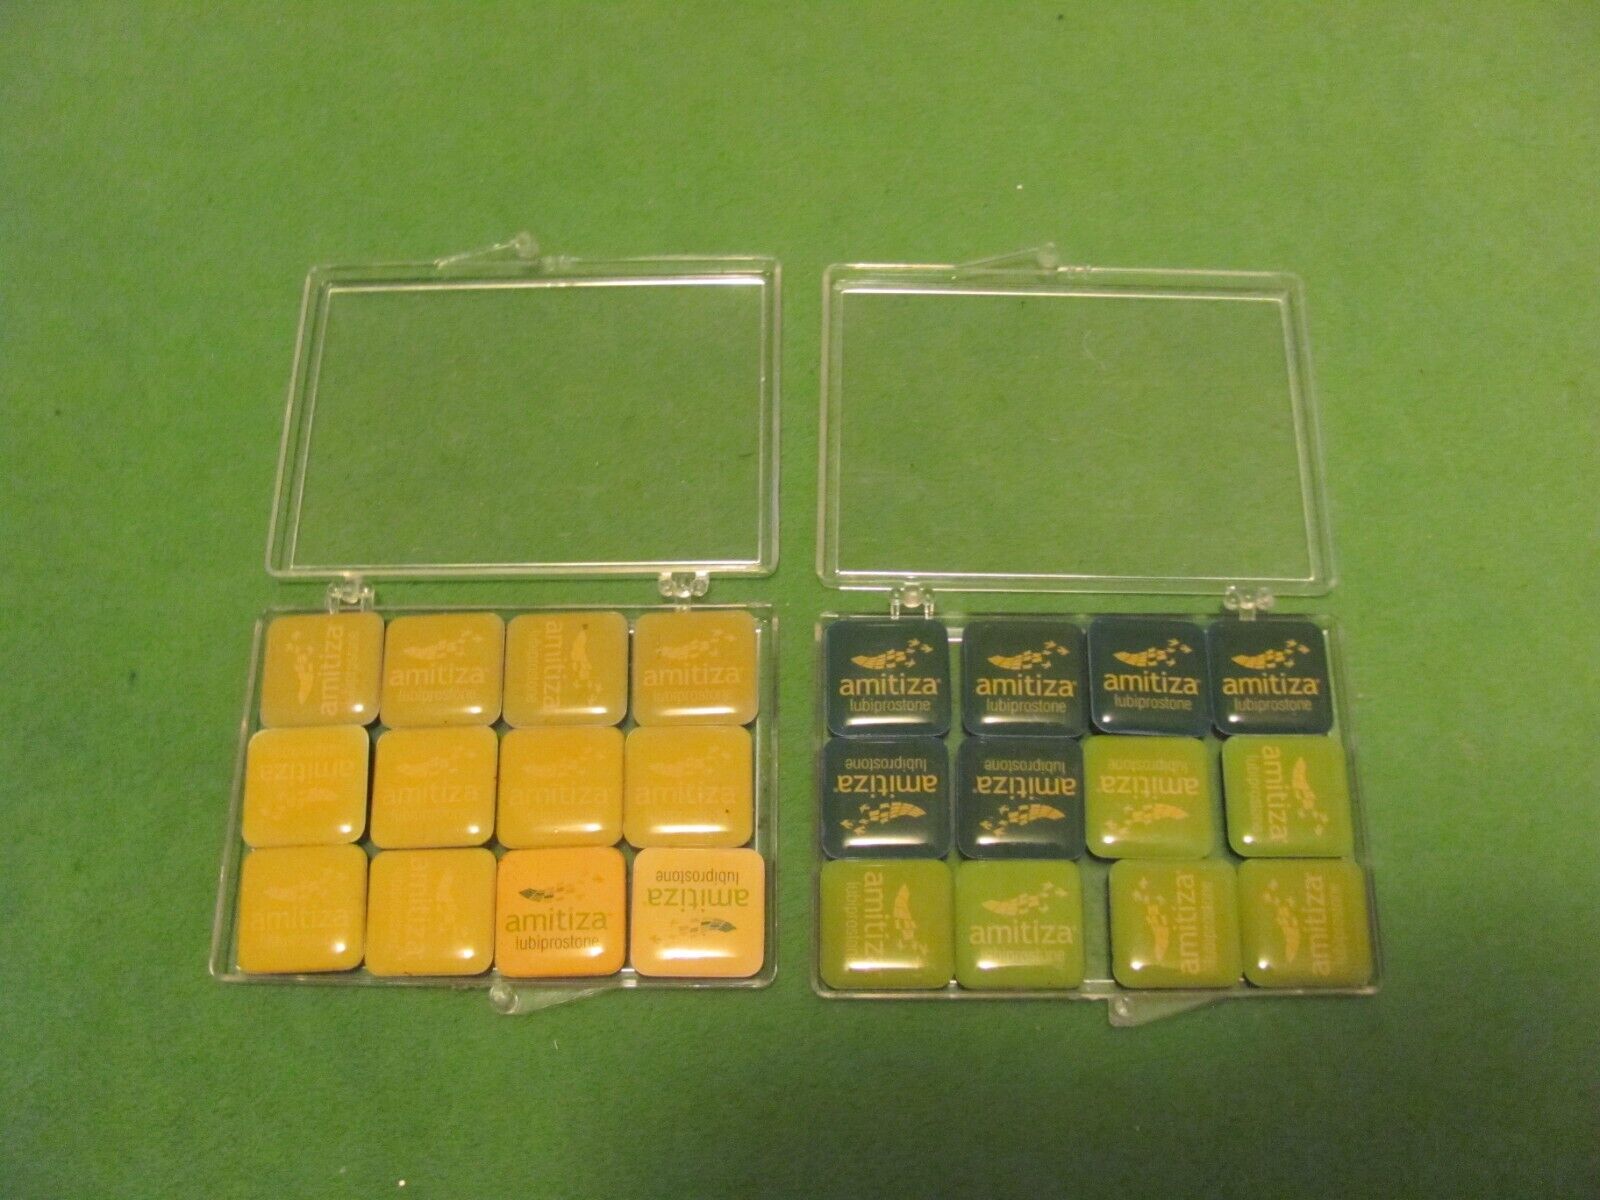 2 set of 12 Amitiza Lubiprostone Drug rep refrigerator clip magnets.